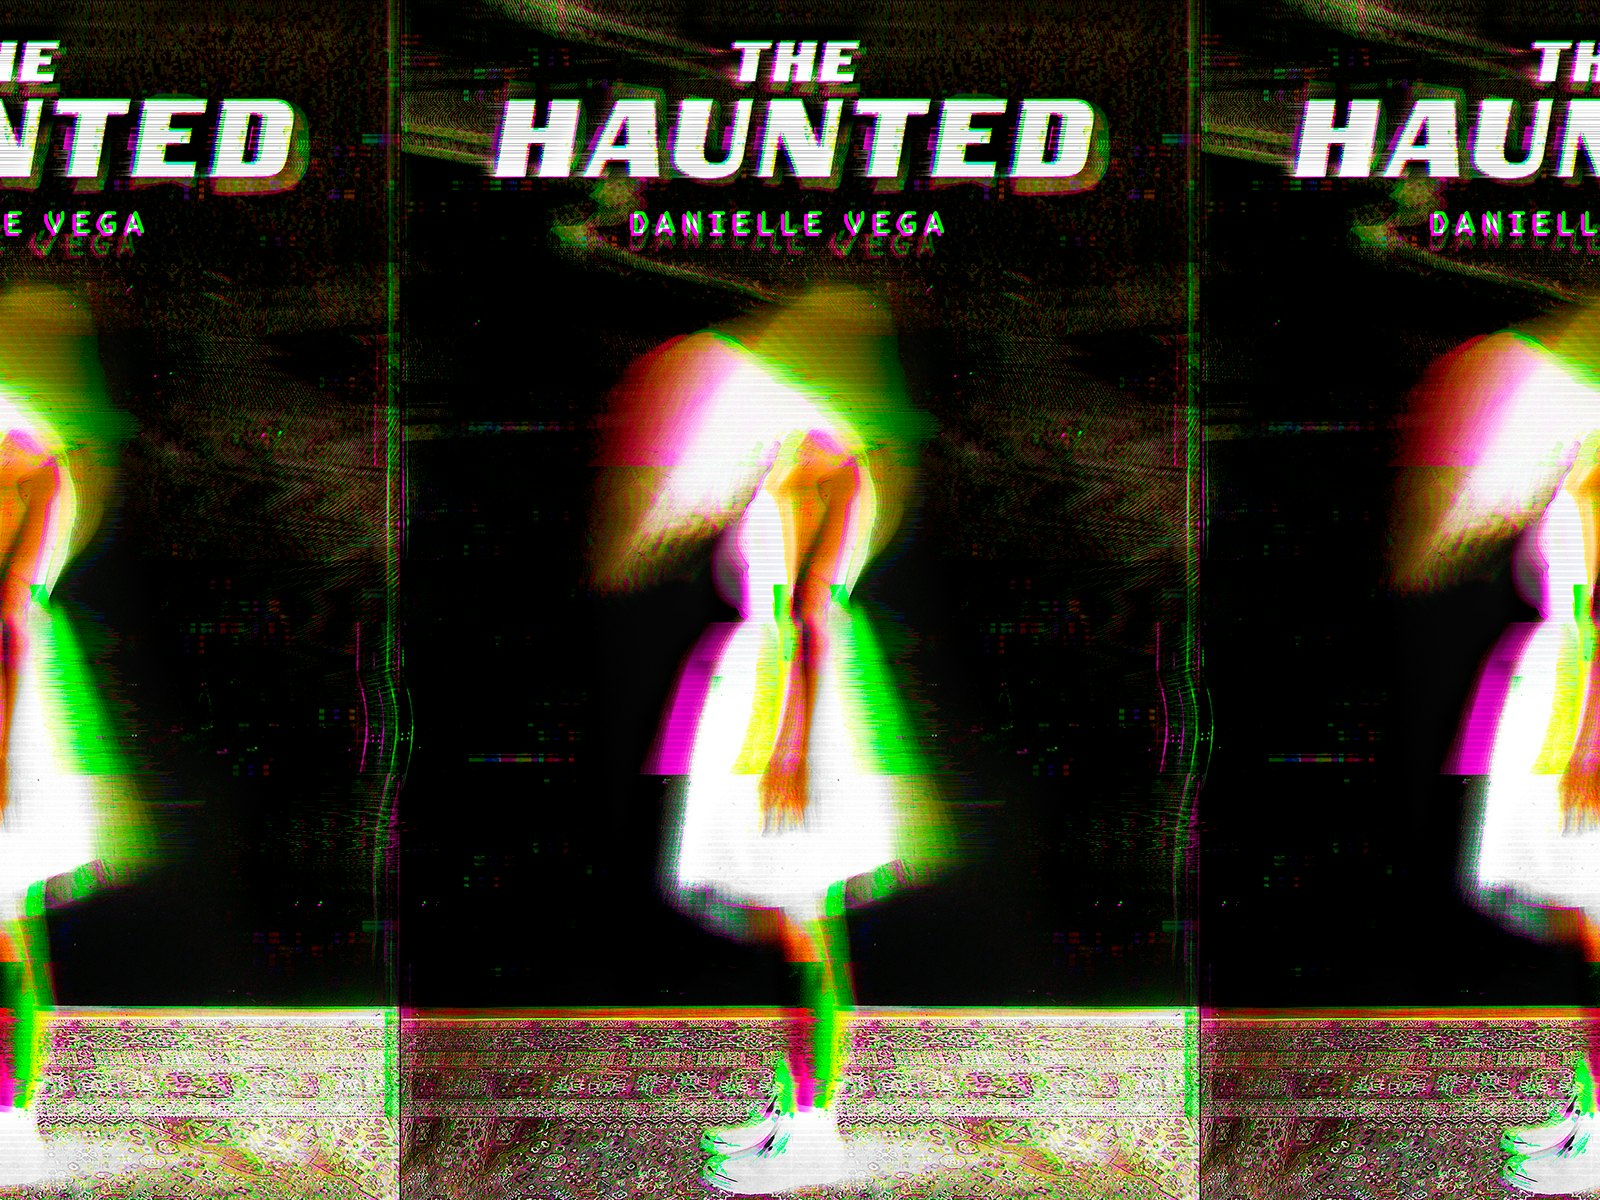 the haunted danielle vega